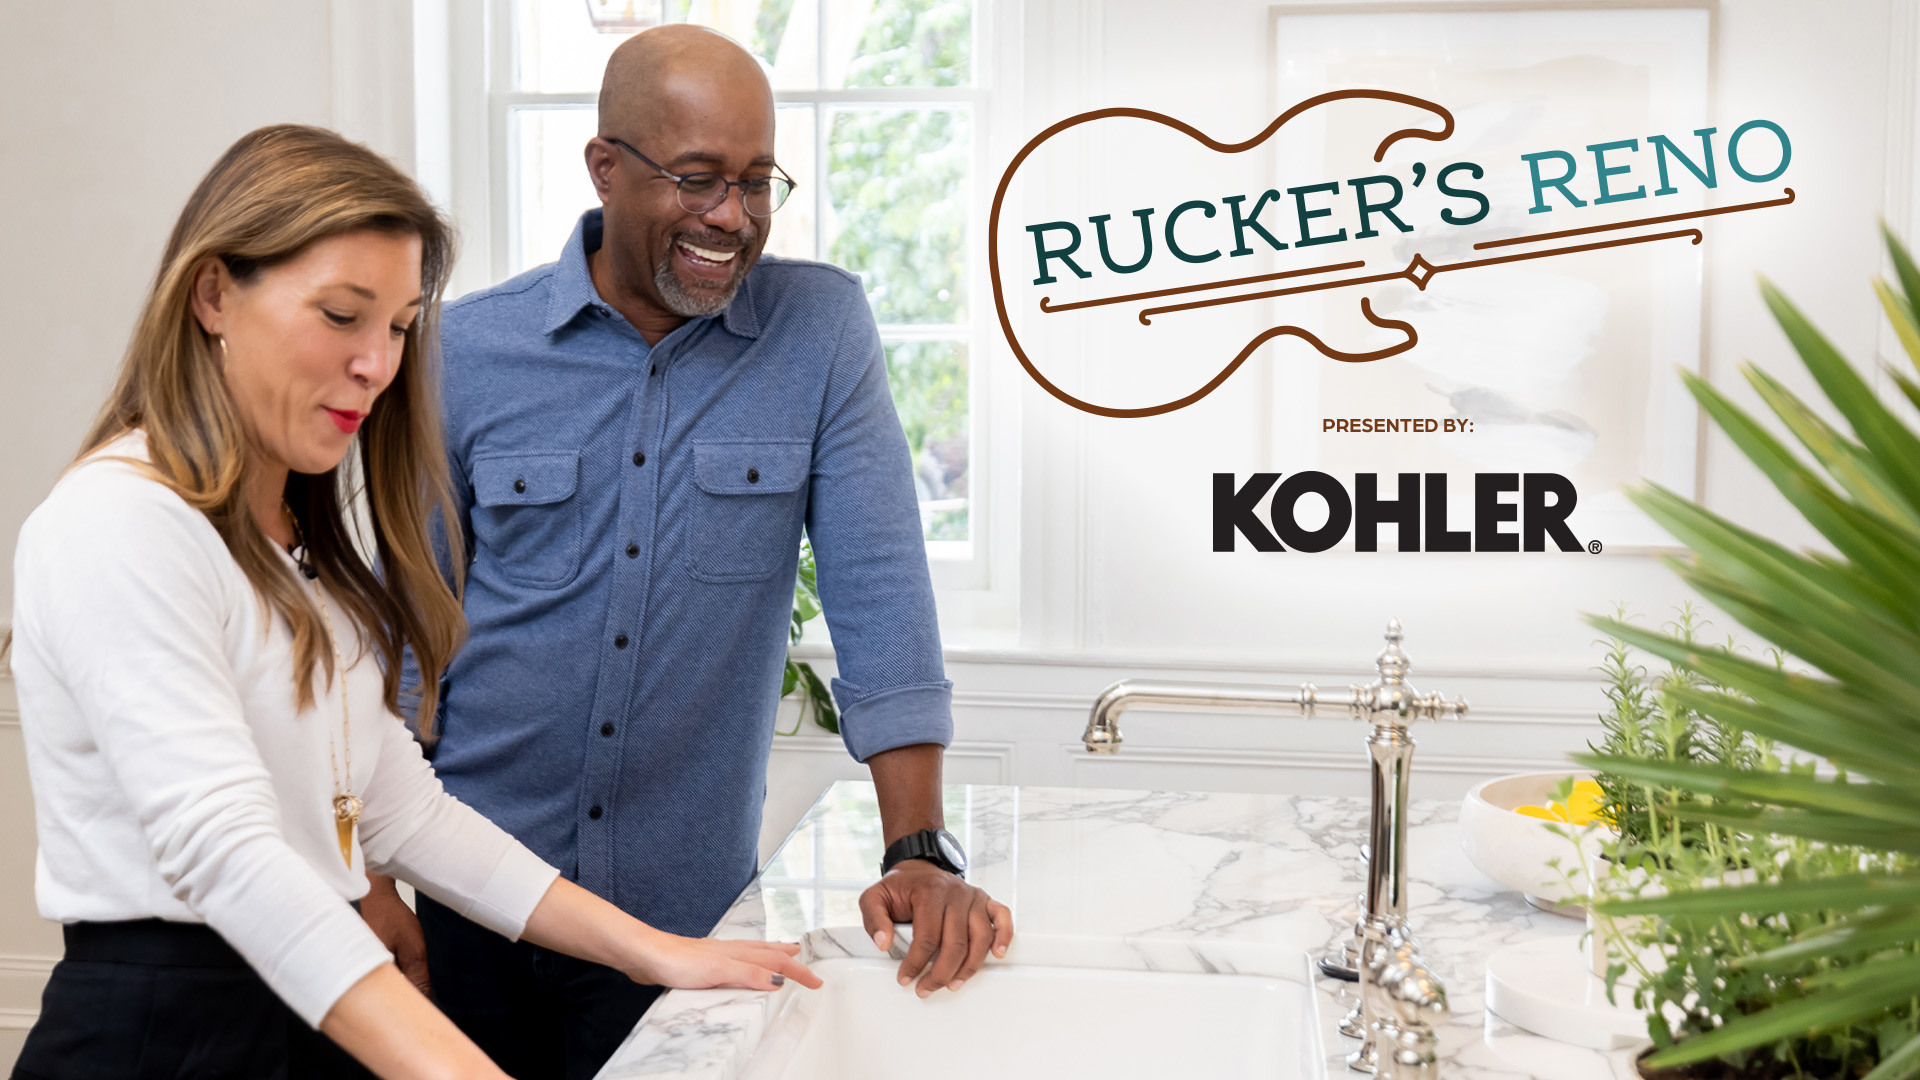 Rucker's Reno Presented By Kohler